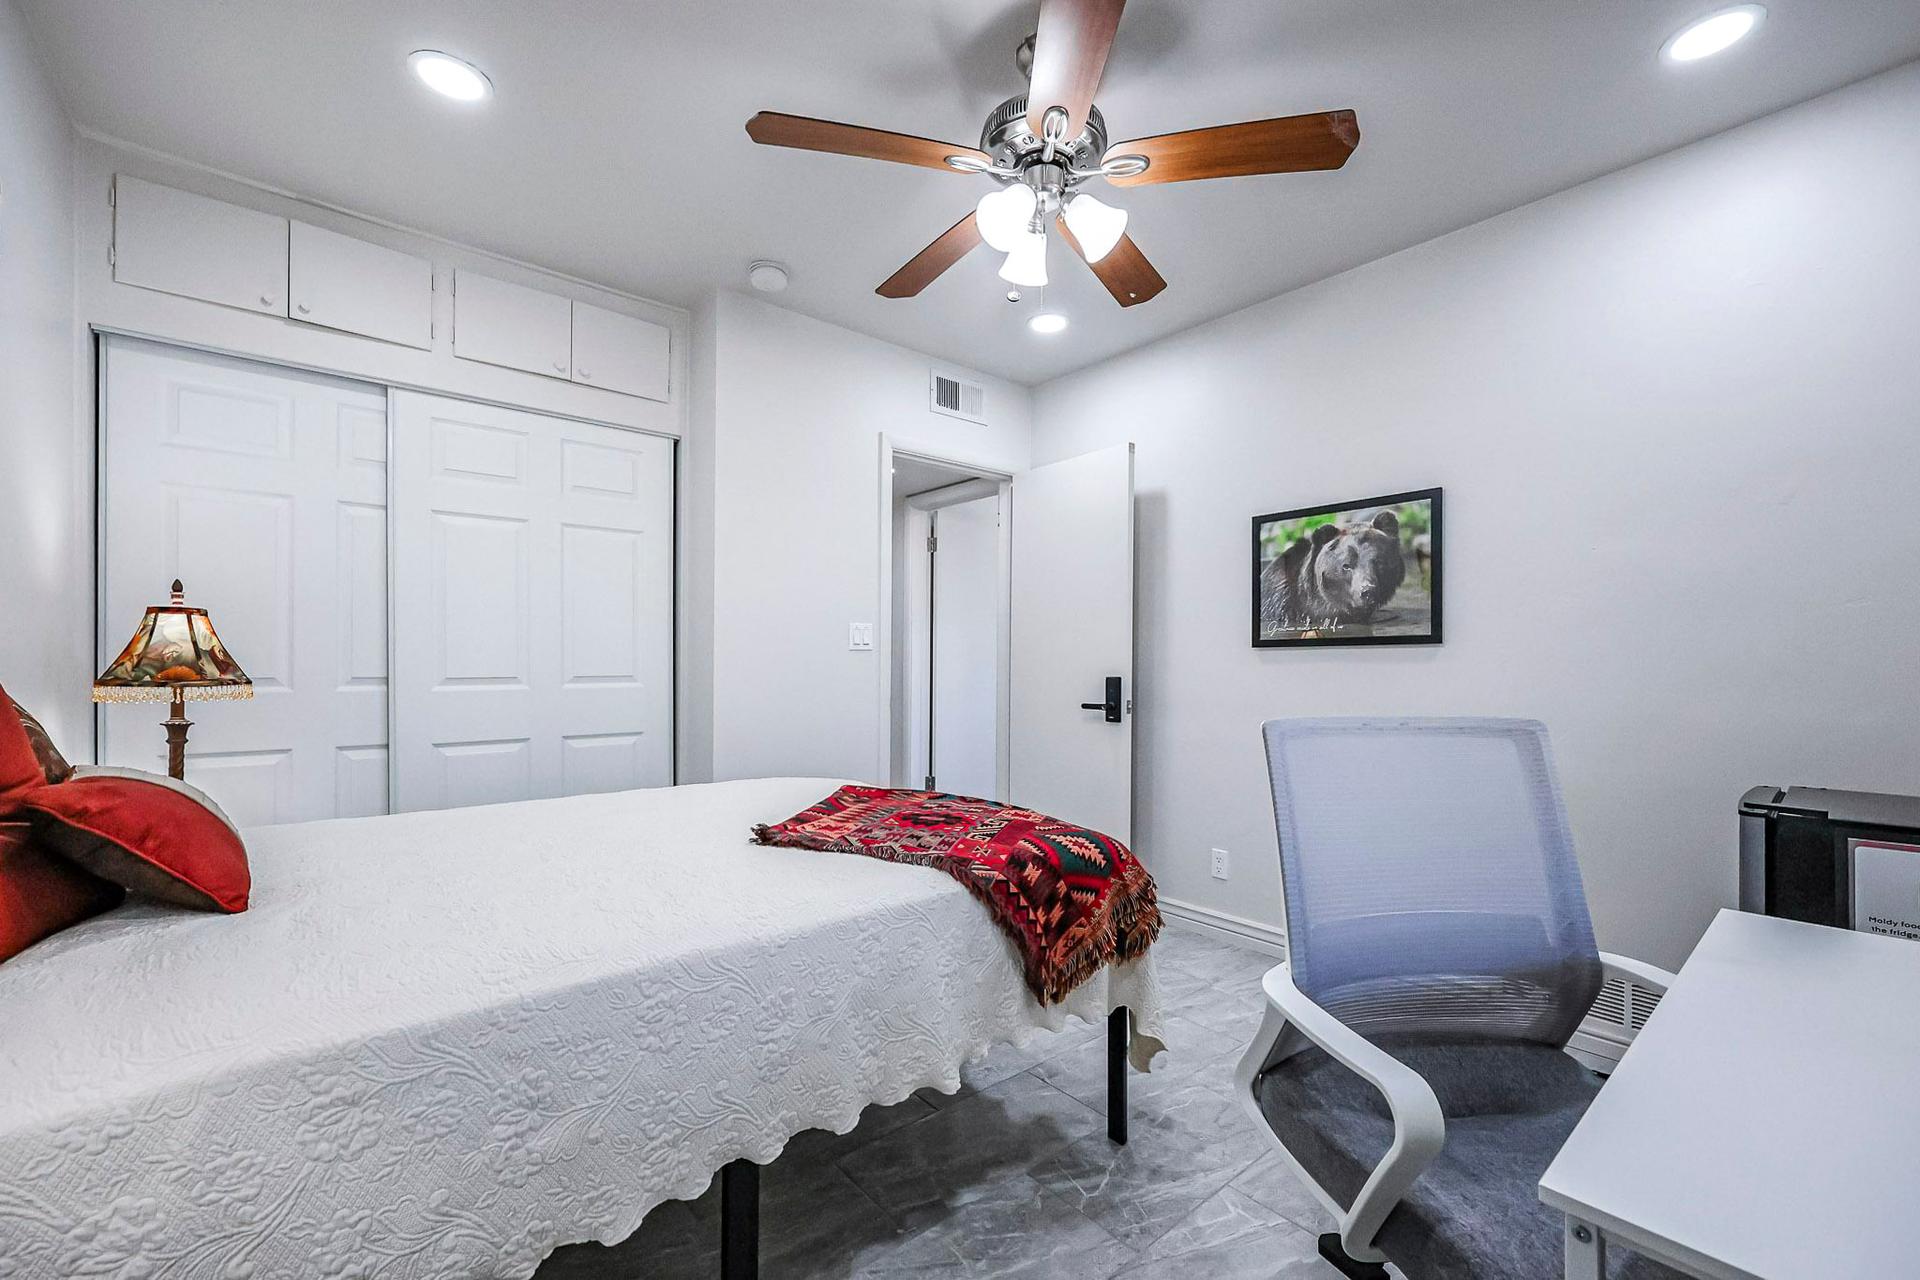 bedroom, detected:ceiling fan, bed